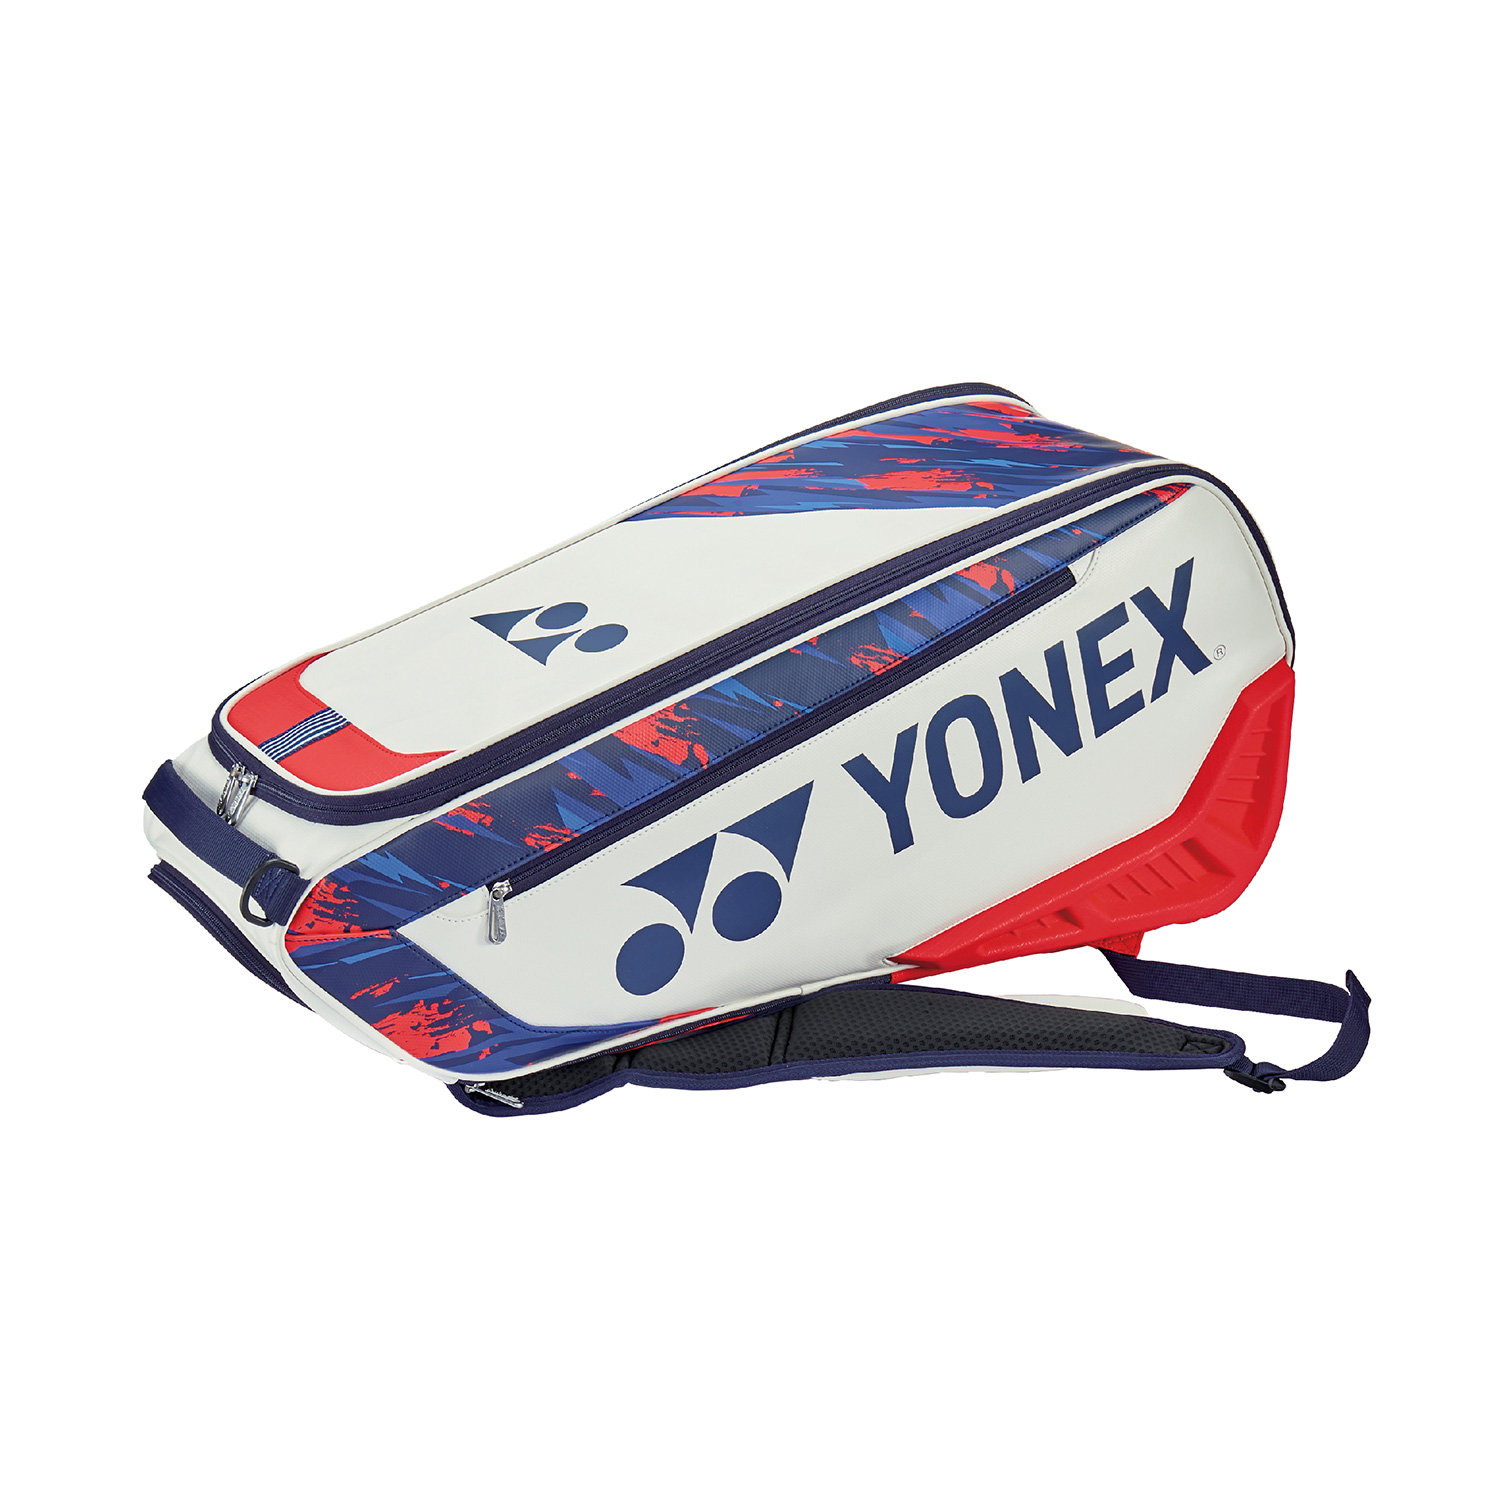 Yonex Expert Thermal x 6 Bag - White/Red